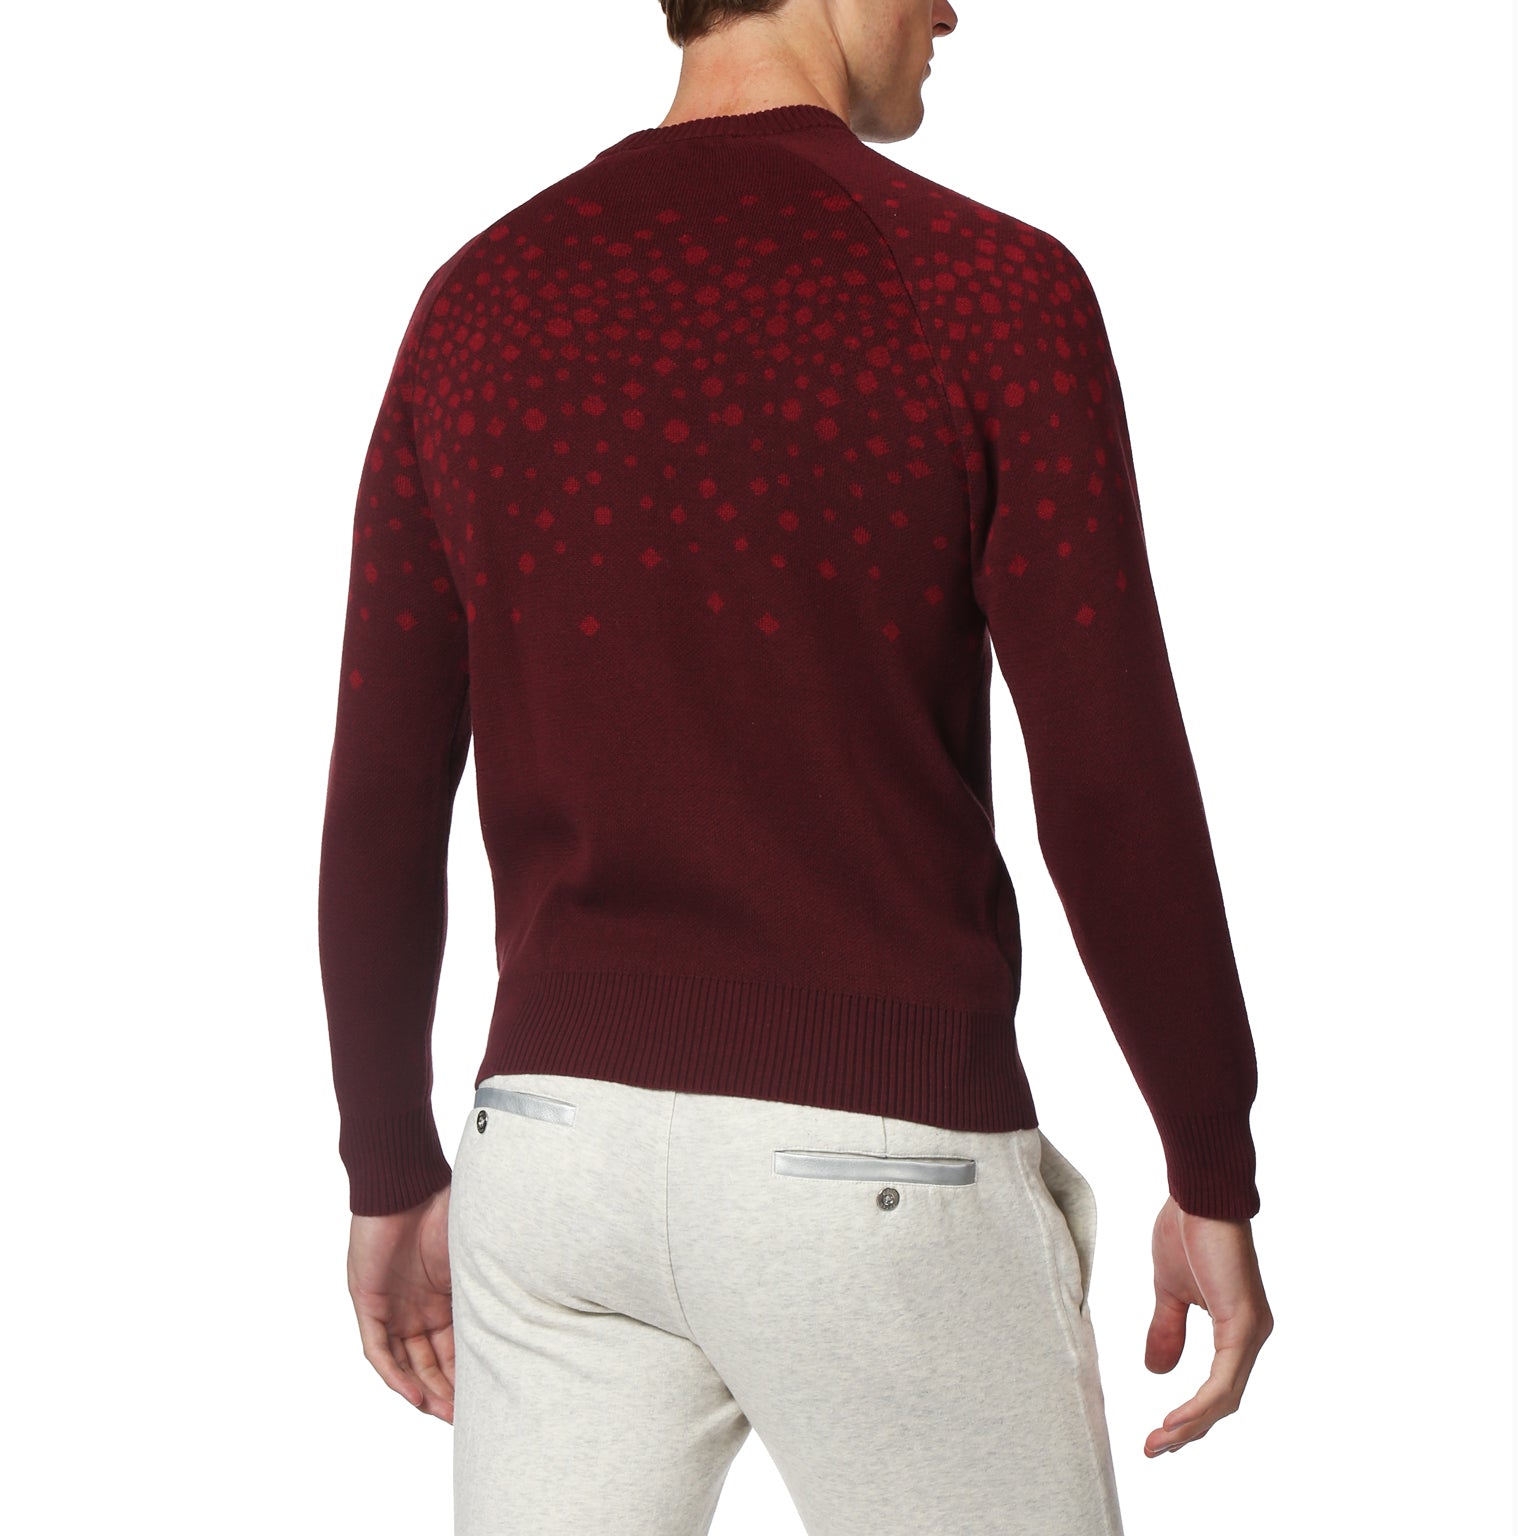 NEW- Mars Red Starlight Sweater